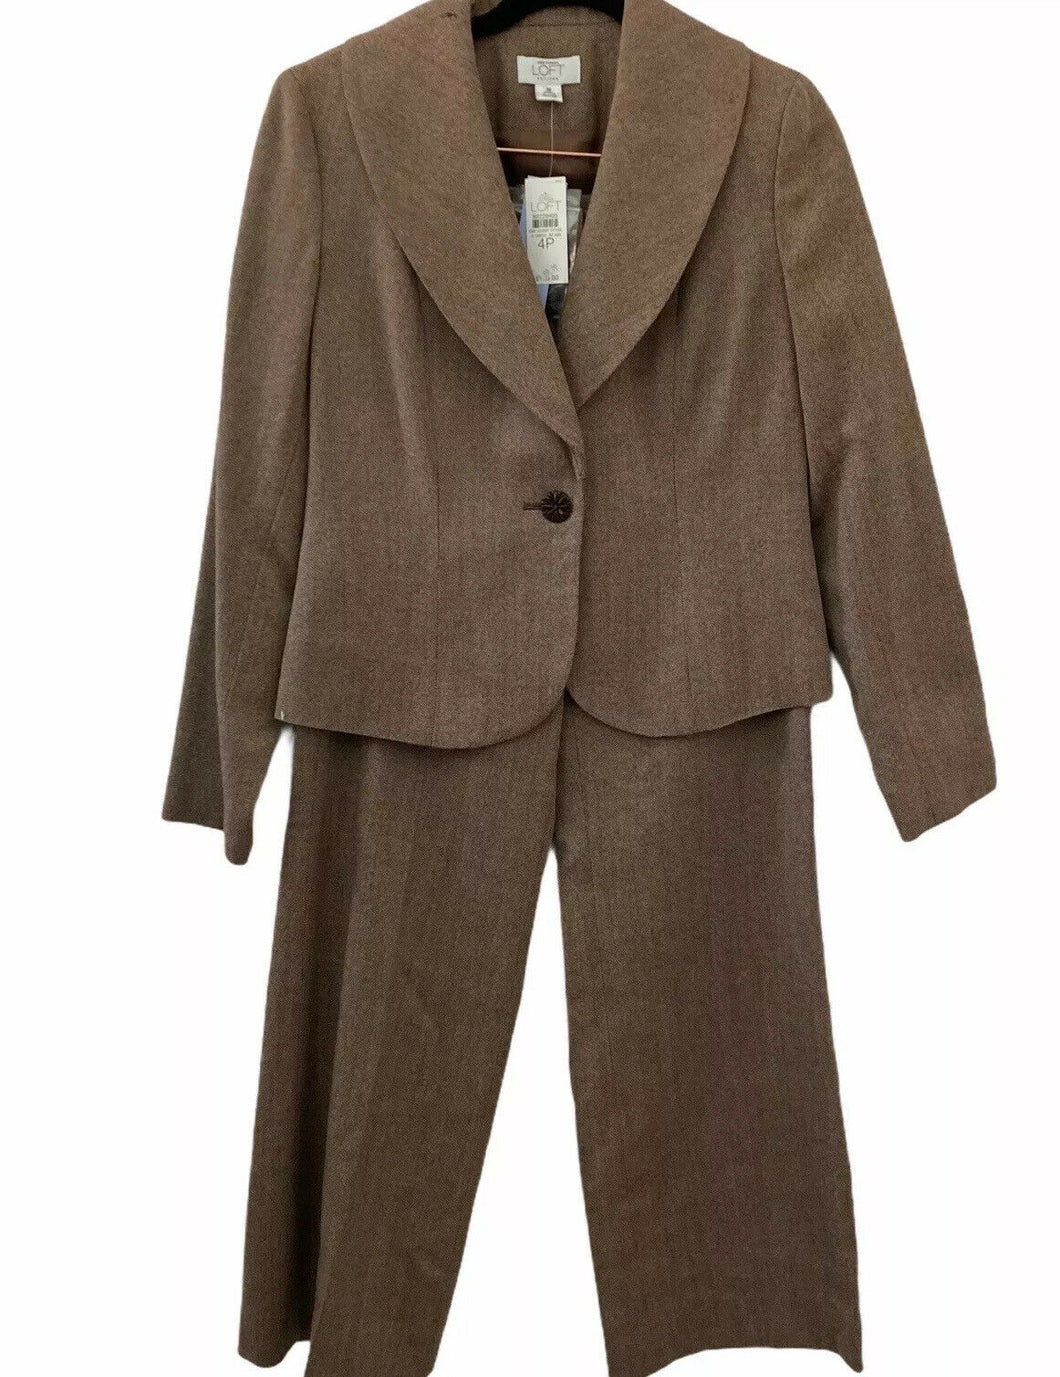 Ann Taylor Loft Petites 2 Piece Pant Suit Women 4P Tweed 100% Wool New